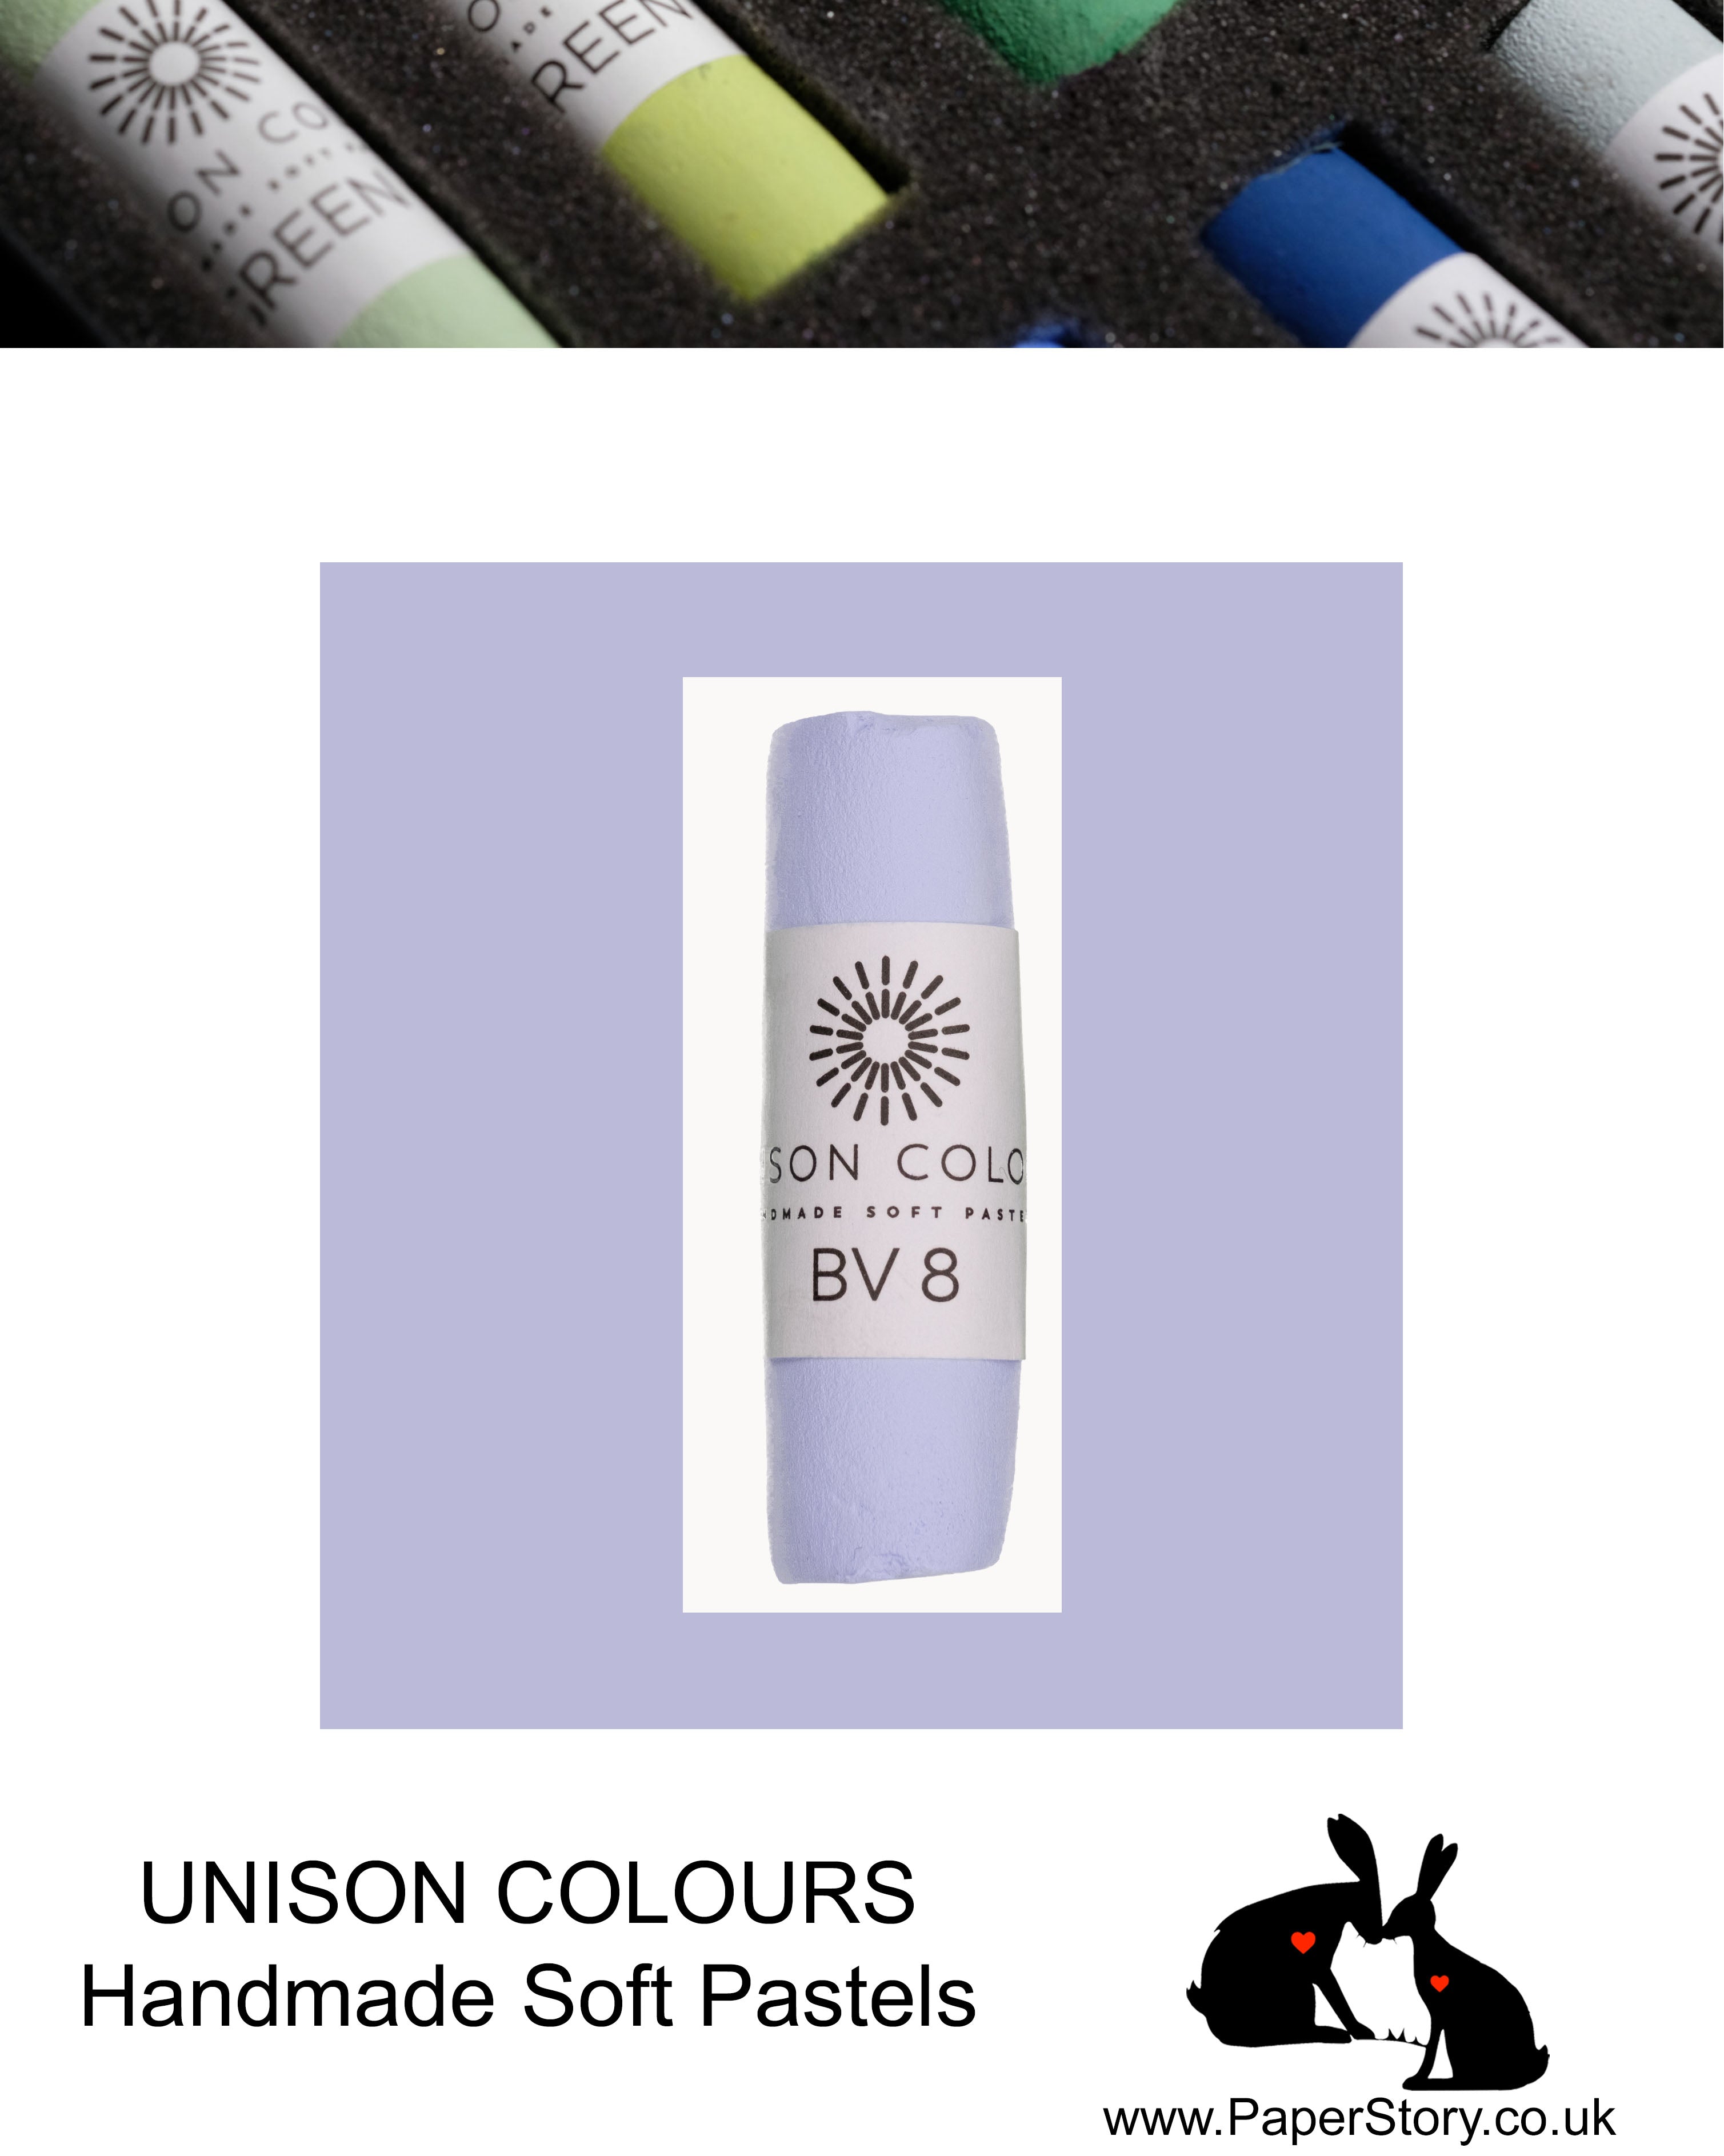 Unison Colour Handmade Soft Pastels Blue Violet 08 - Size Regular